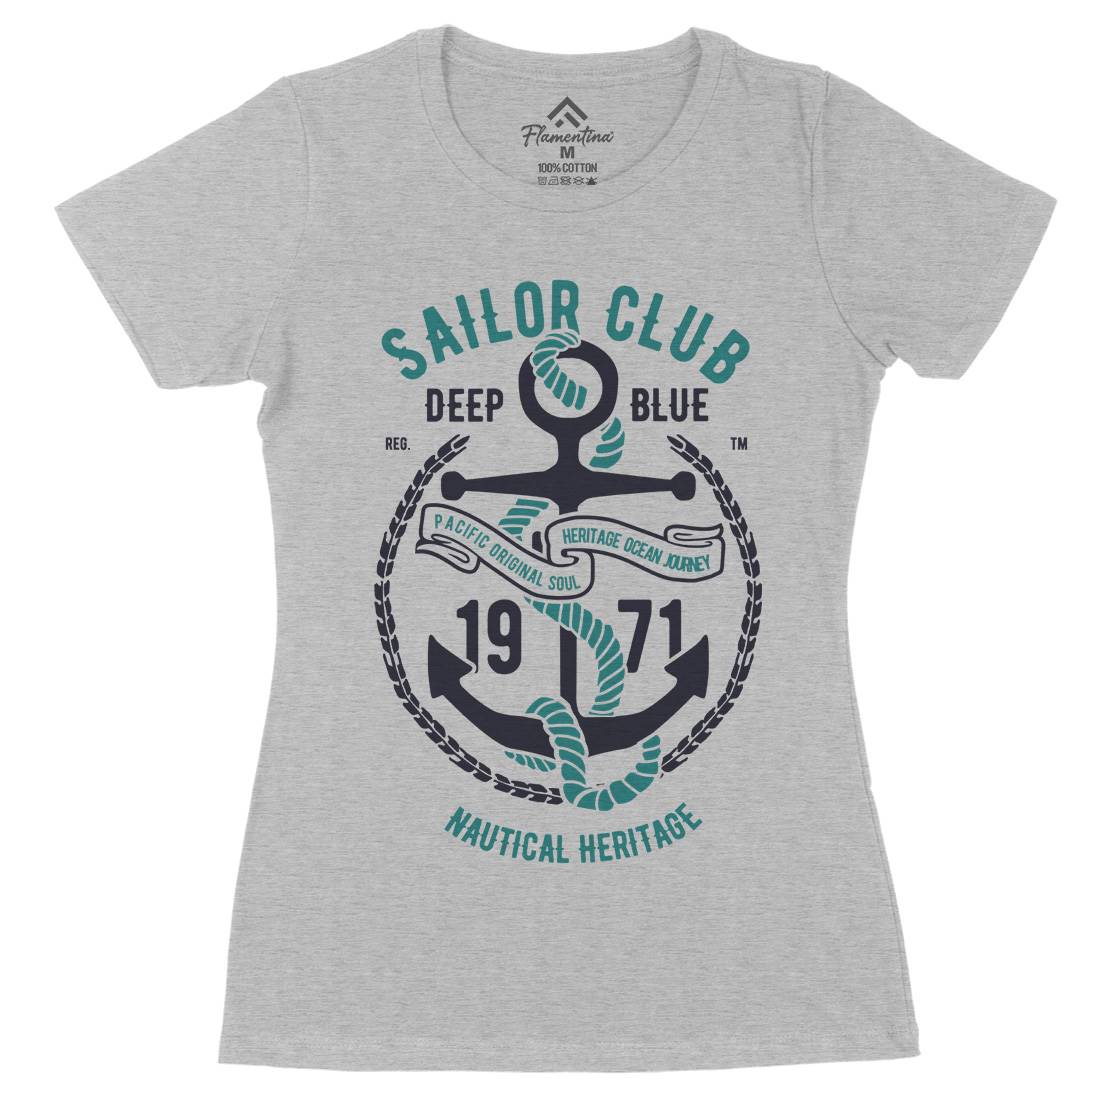 Sailor Club Womens Organic Crew Neck T-Shirt Navy B445